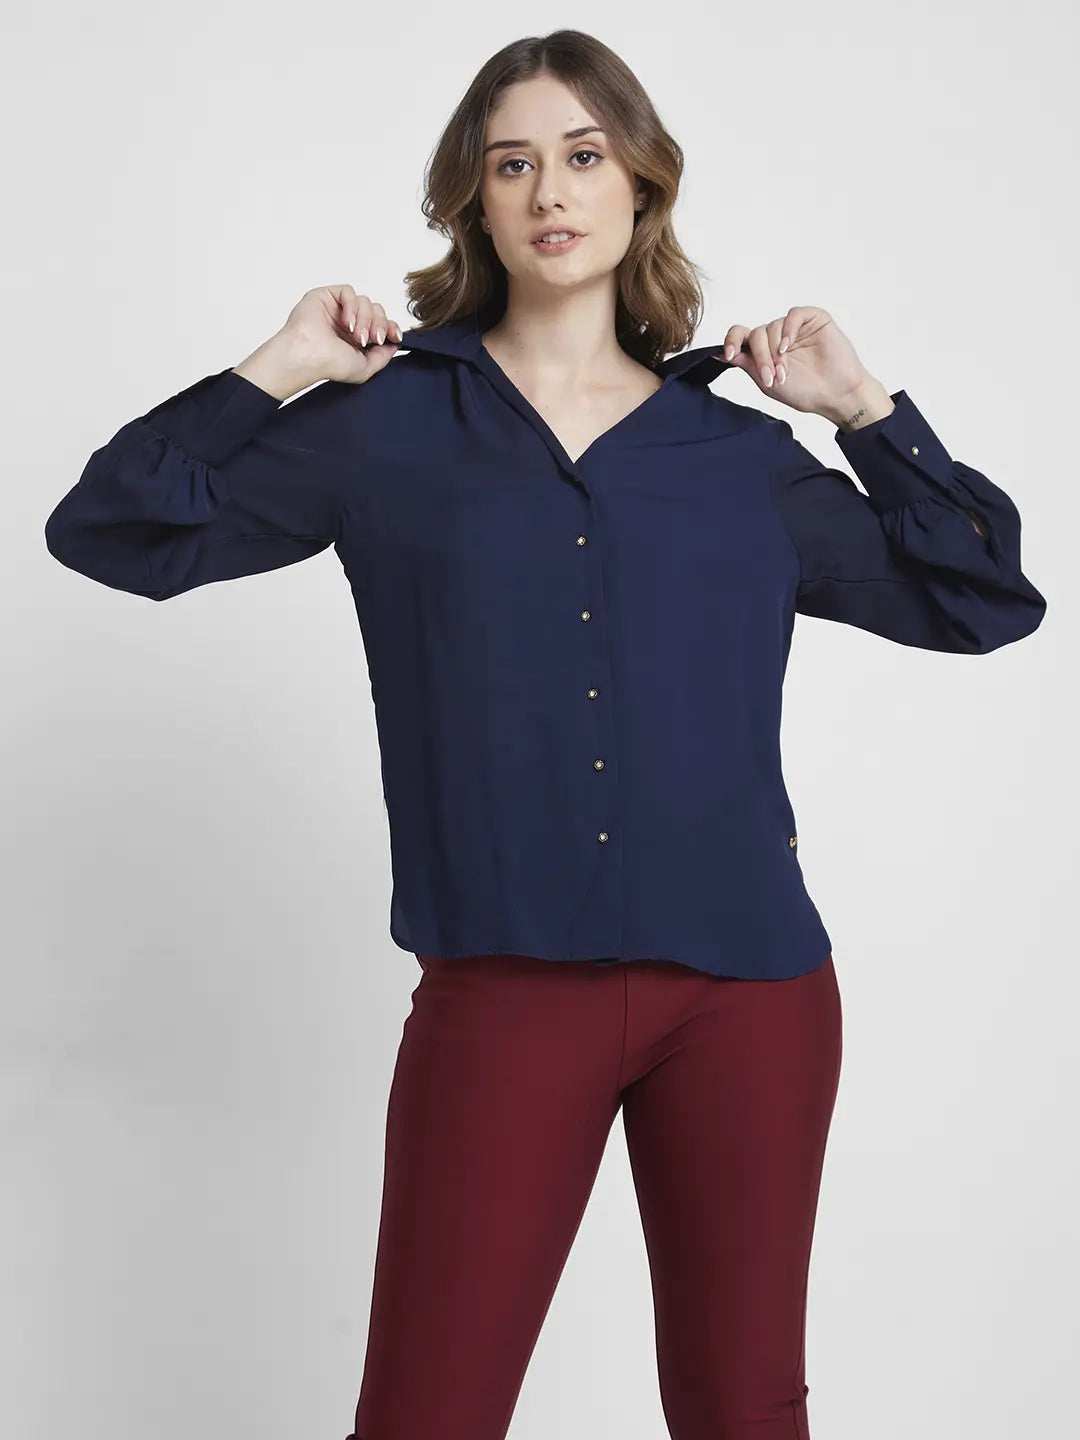 Spykar Women Navy Blue Polyester Regular Fit Full Sleeve Plain Shirt